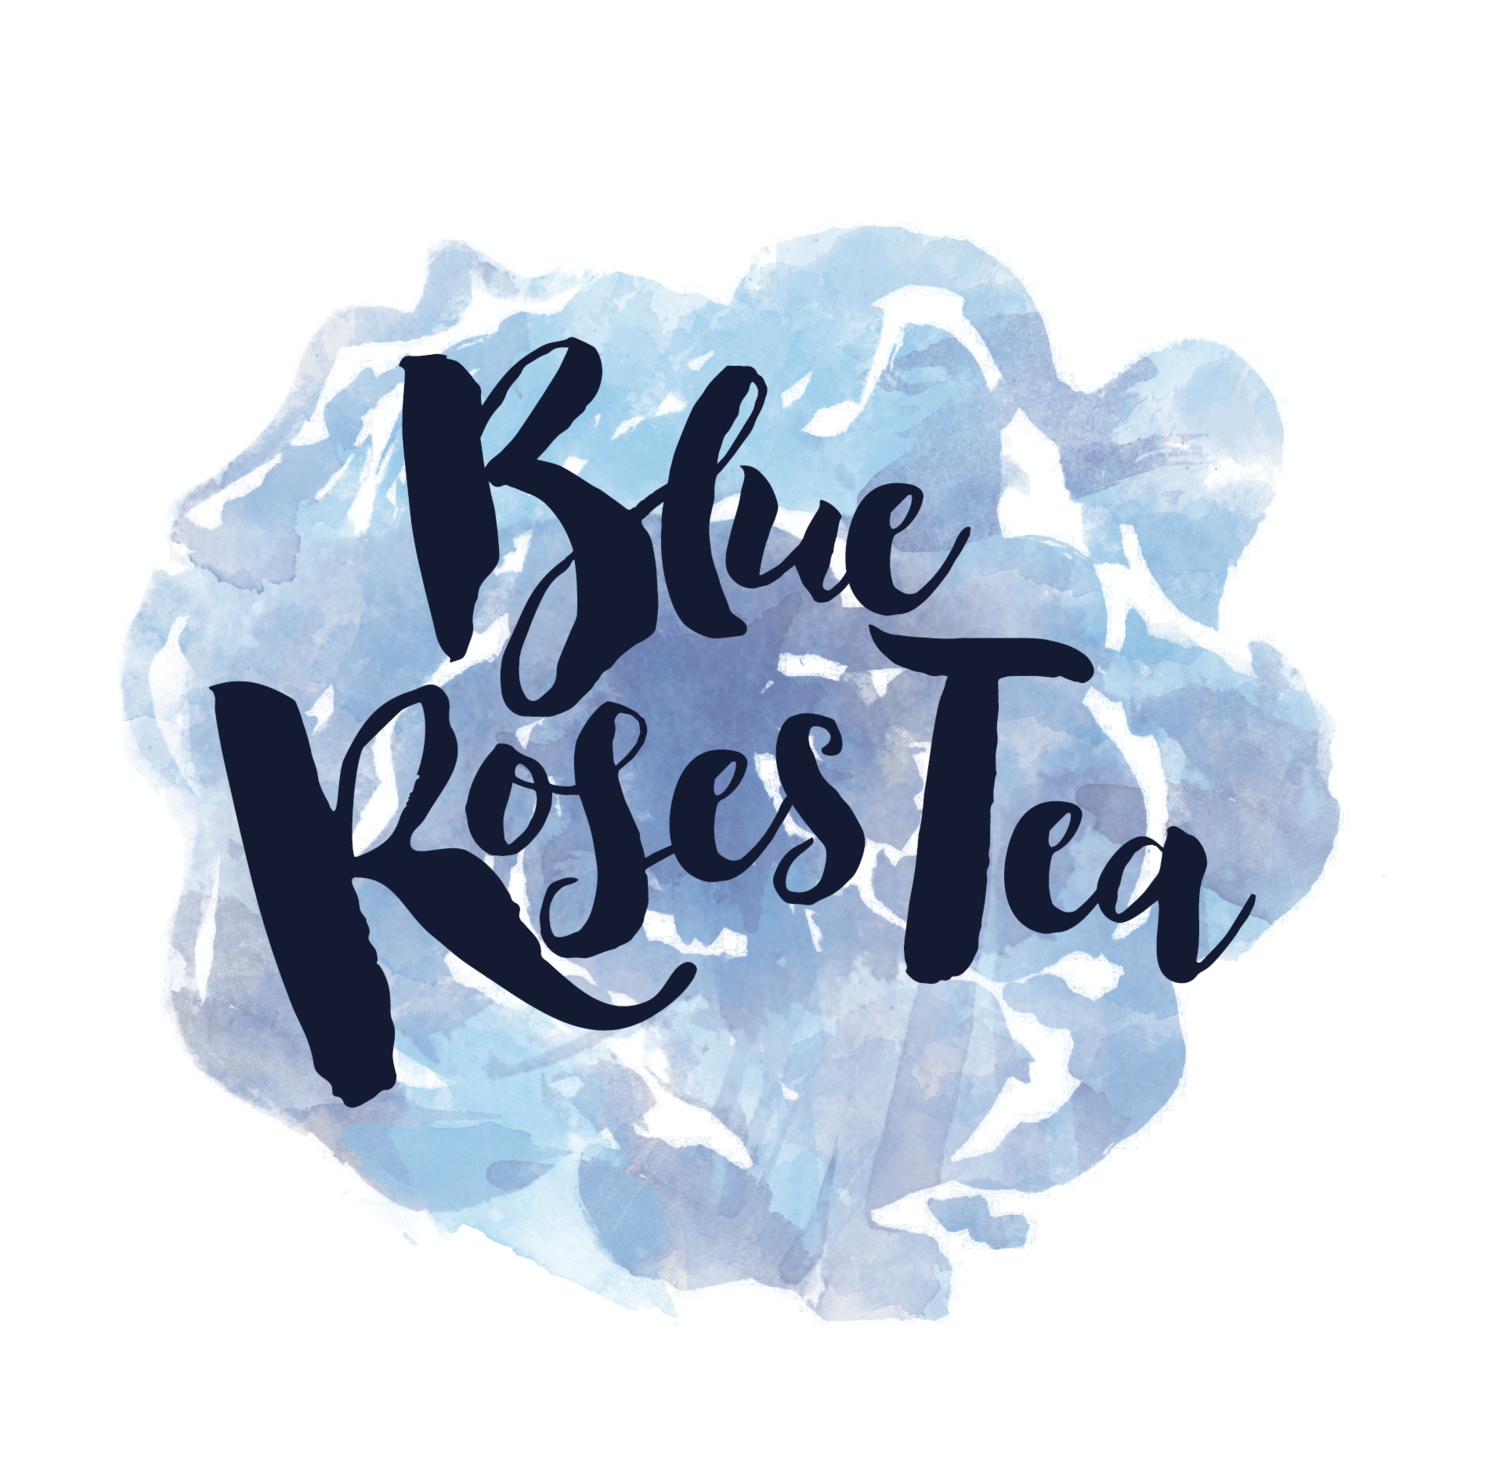 Blue Roses Tea